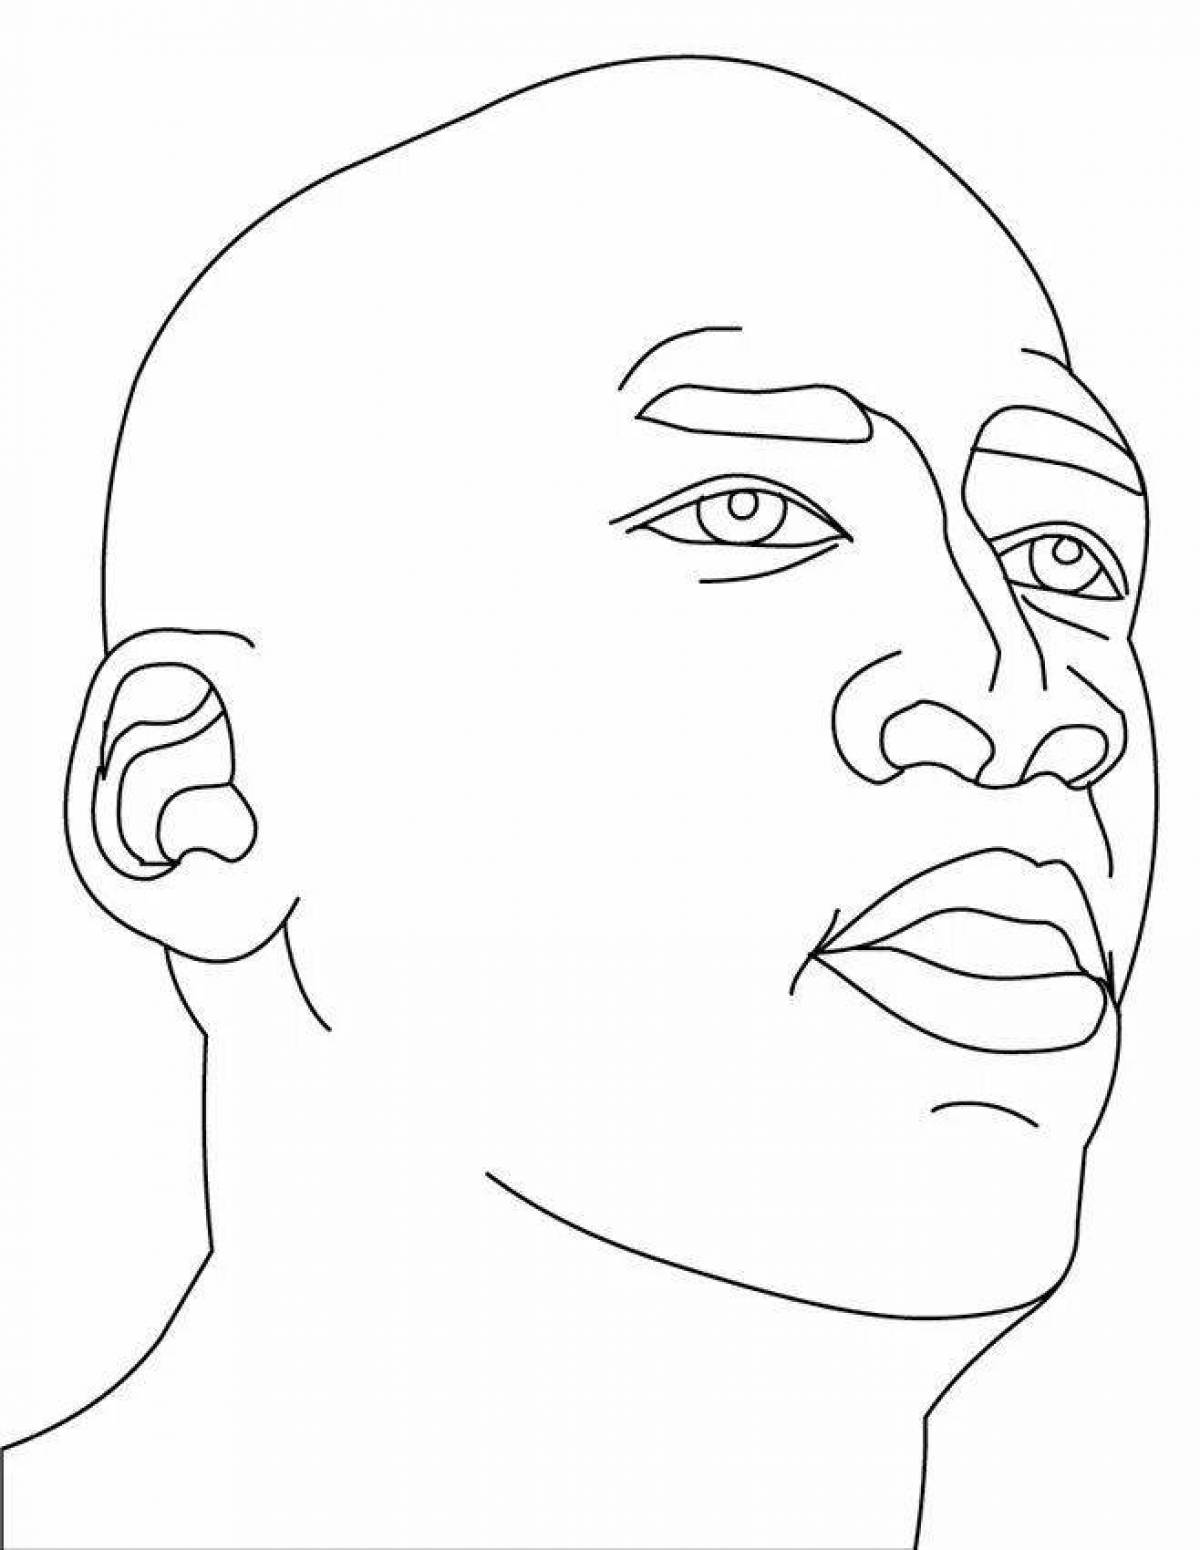 Майкл Джордан рисунок лицо